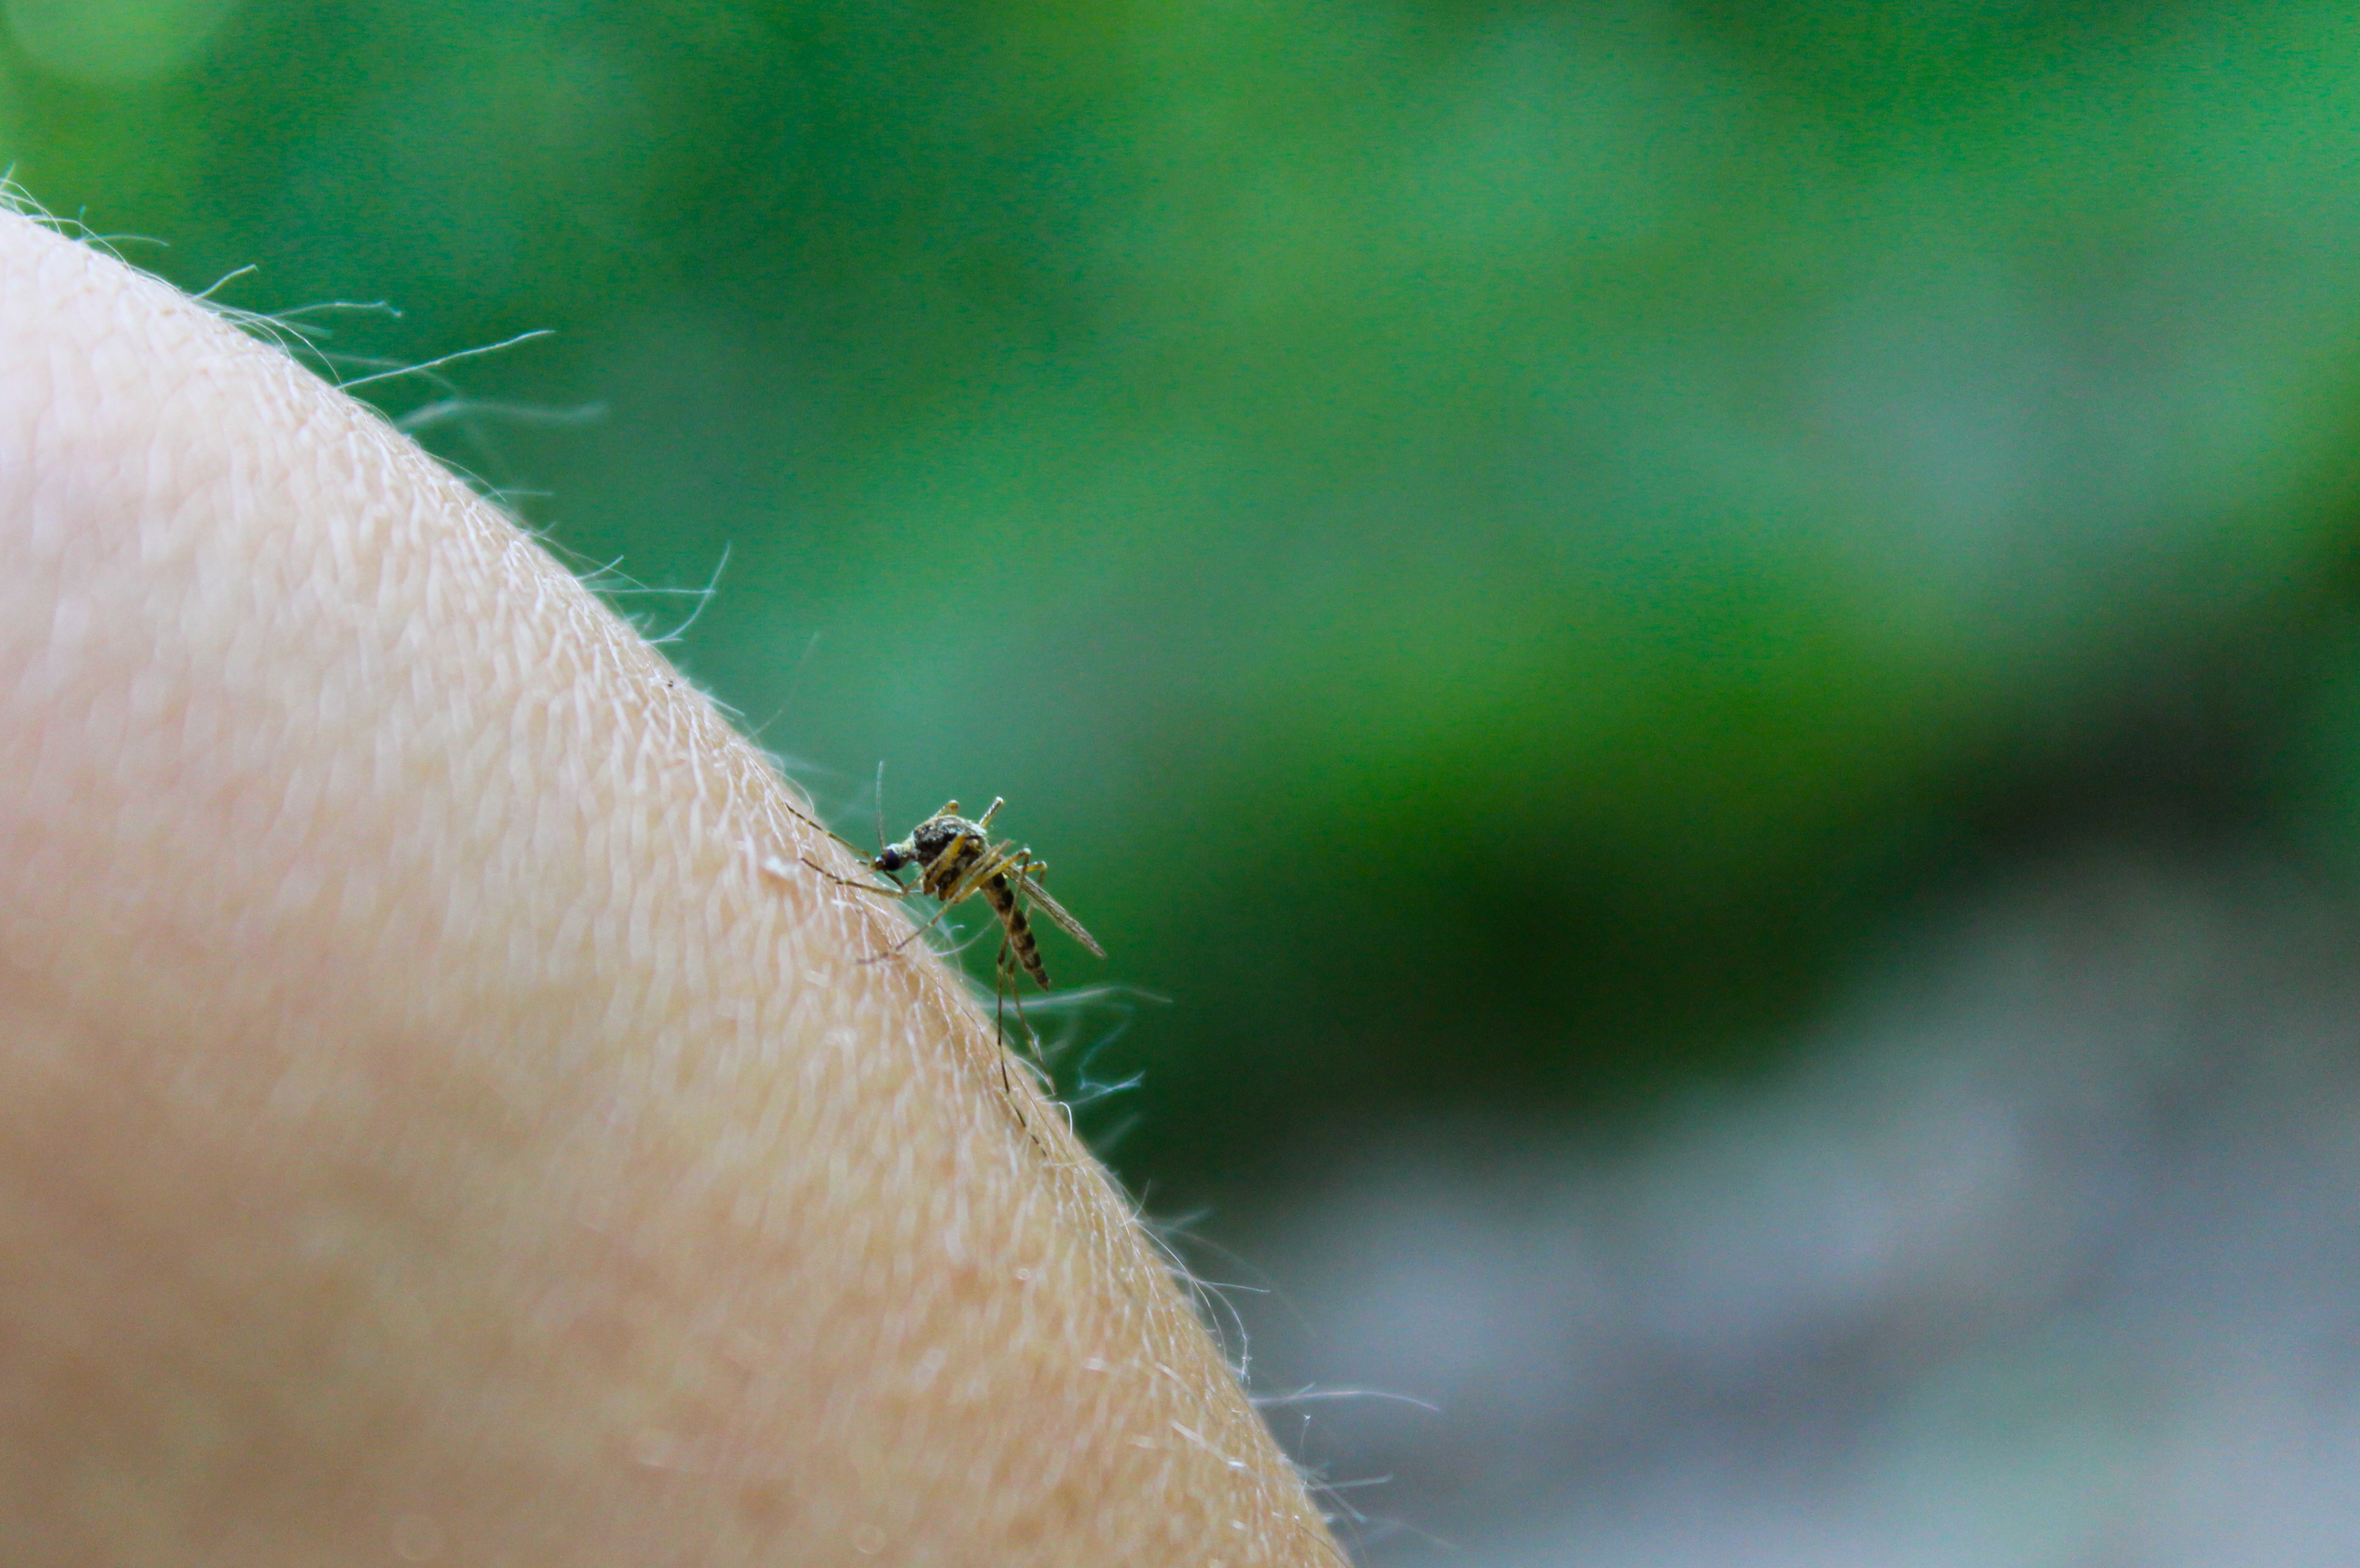 Bilde av mygg på huden til en person